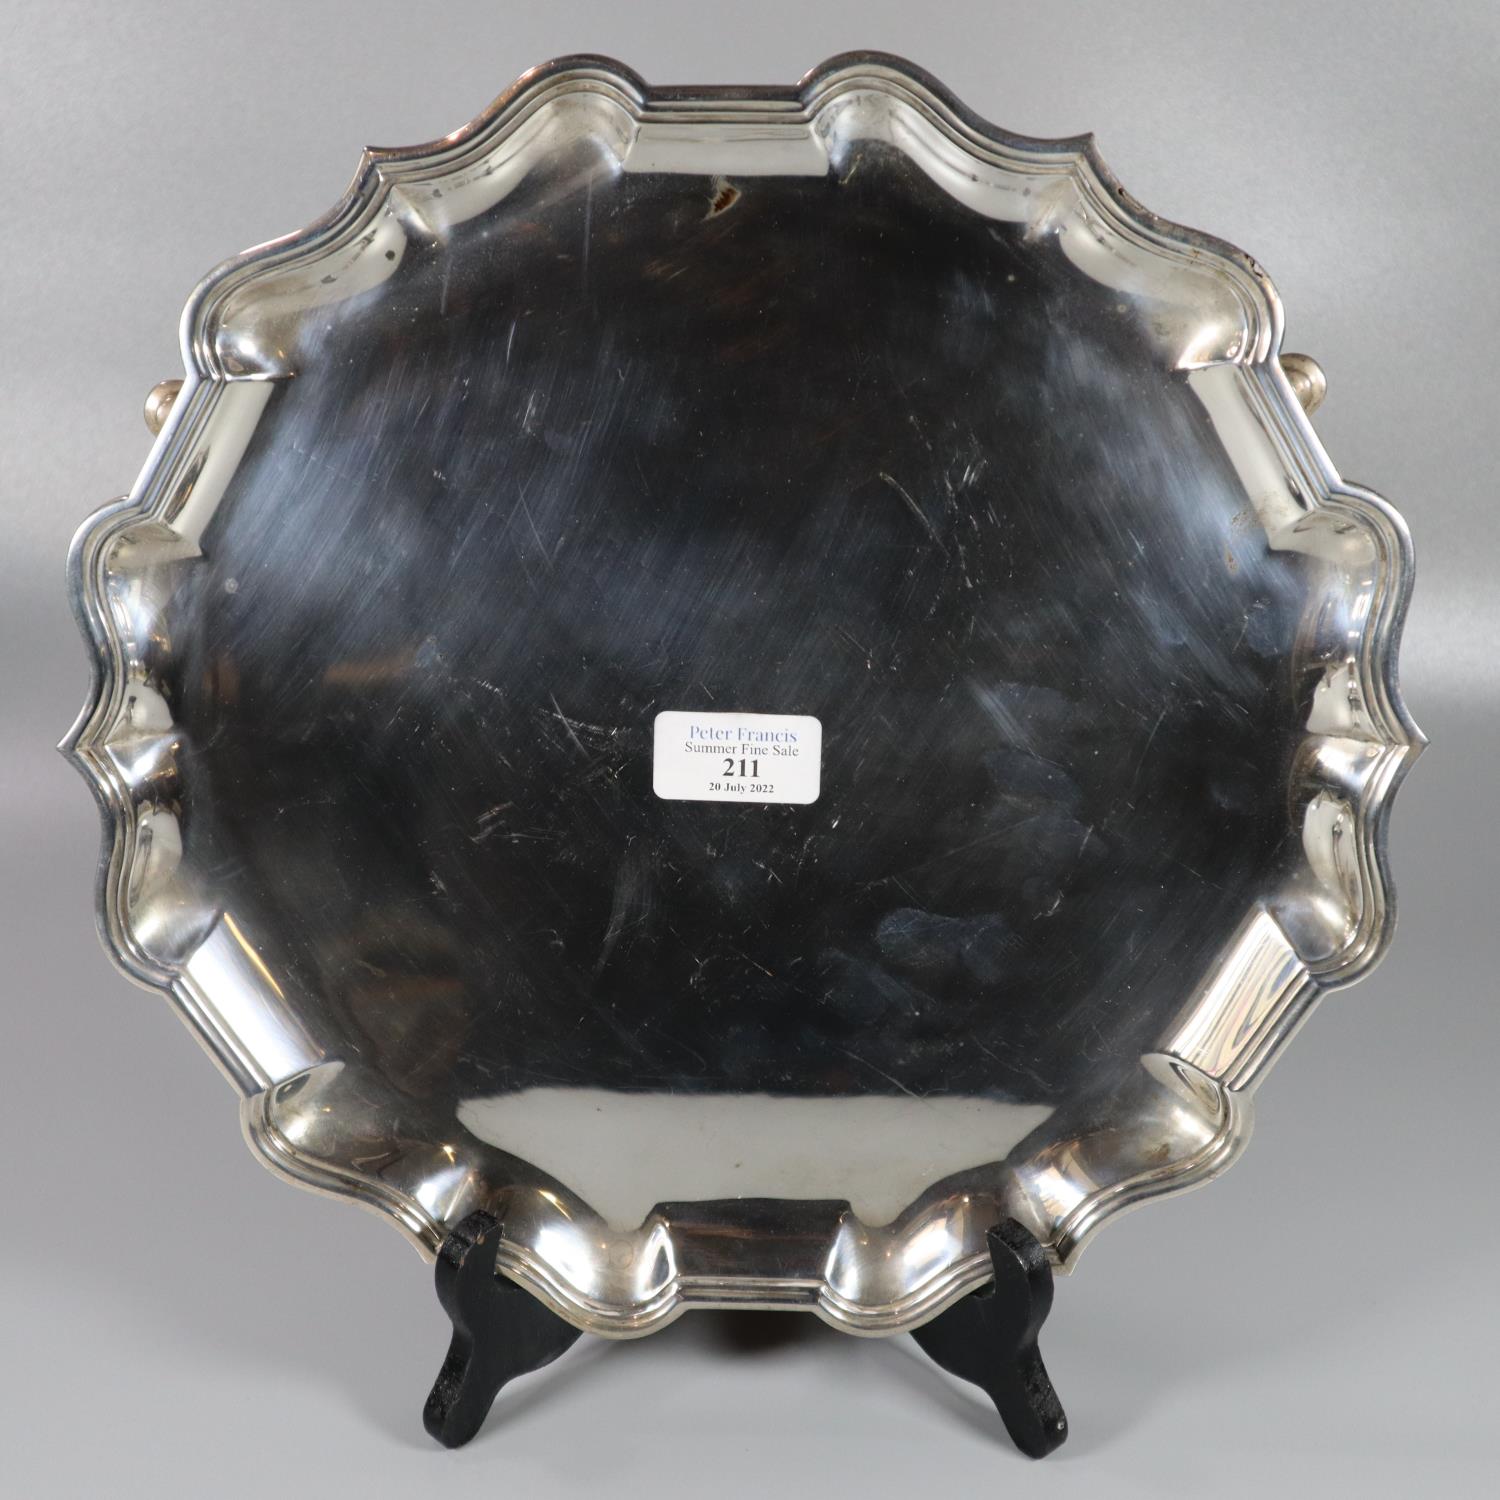 Edward VII silver salver of pie crust form standing on three hoof feet by C S Harris & Sons Ltd